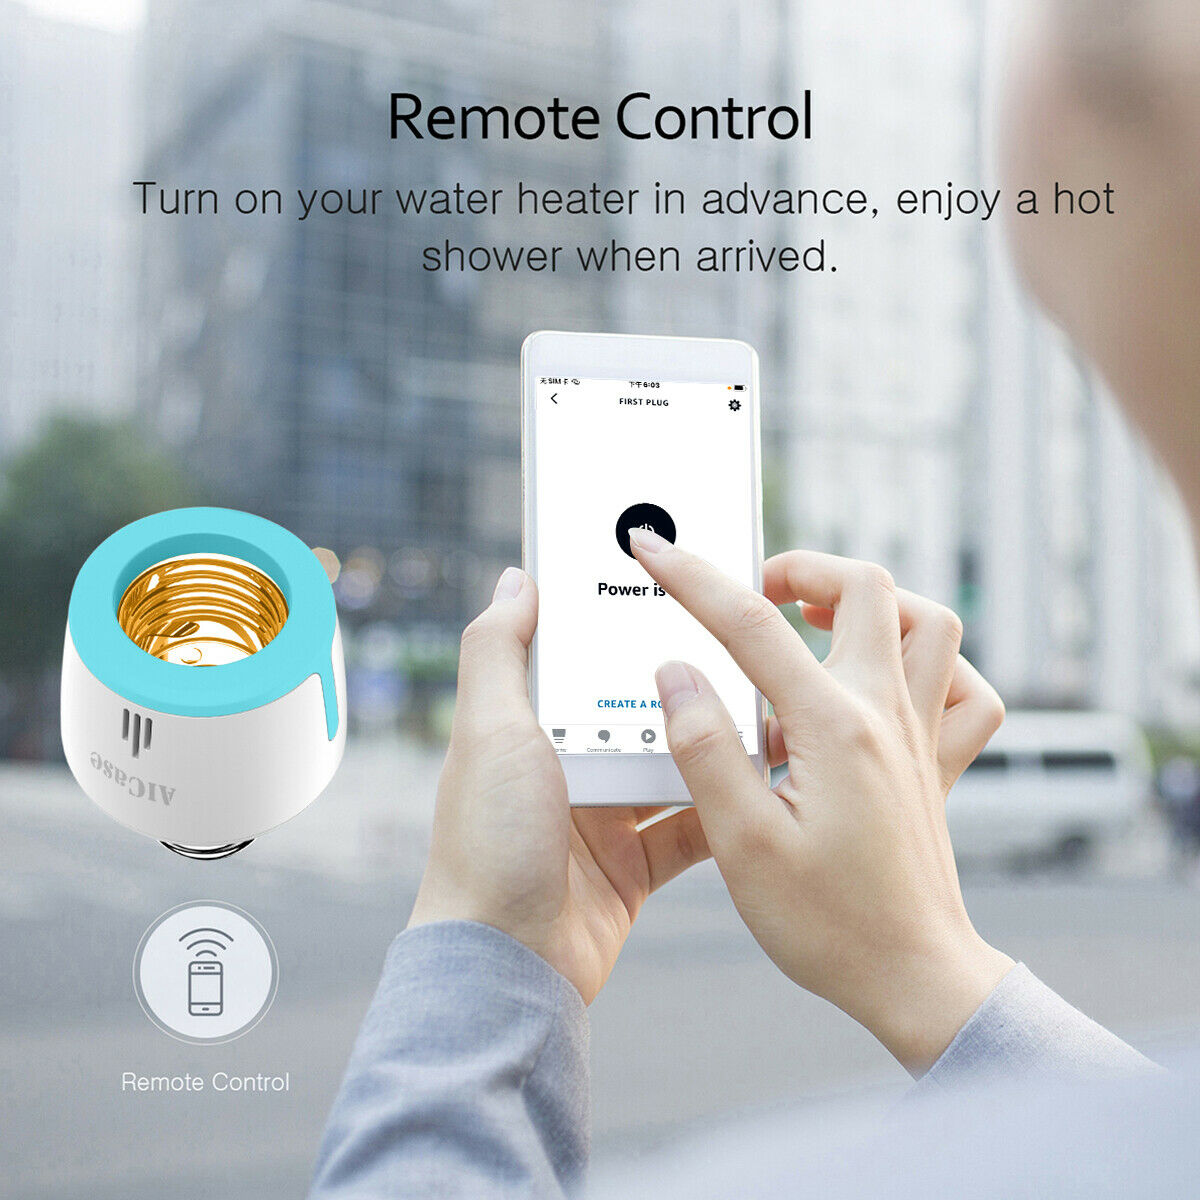 Smart Wifi E27 Light Socket, AICase Intelligent Wlan Home Remote contr –